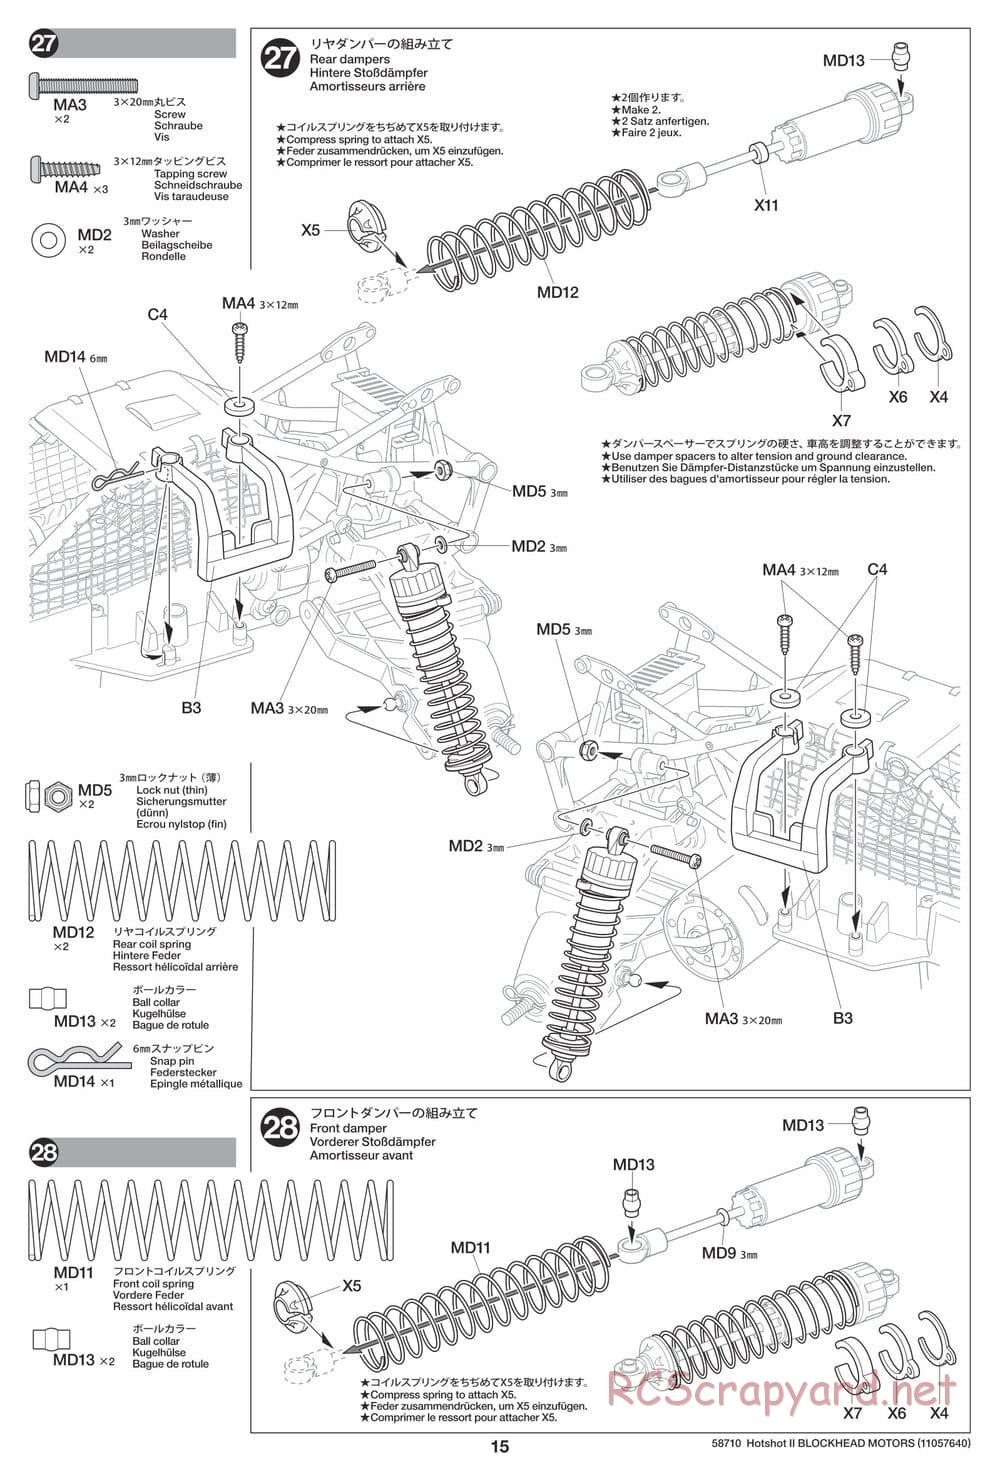 Tamiya - Hotshot II Blockhead Motors - HS Chassis - Manual - Page 15